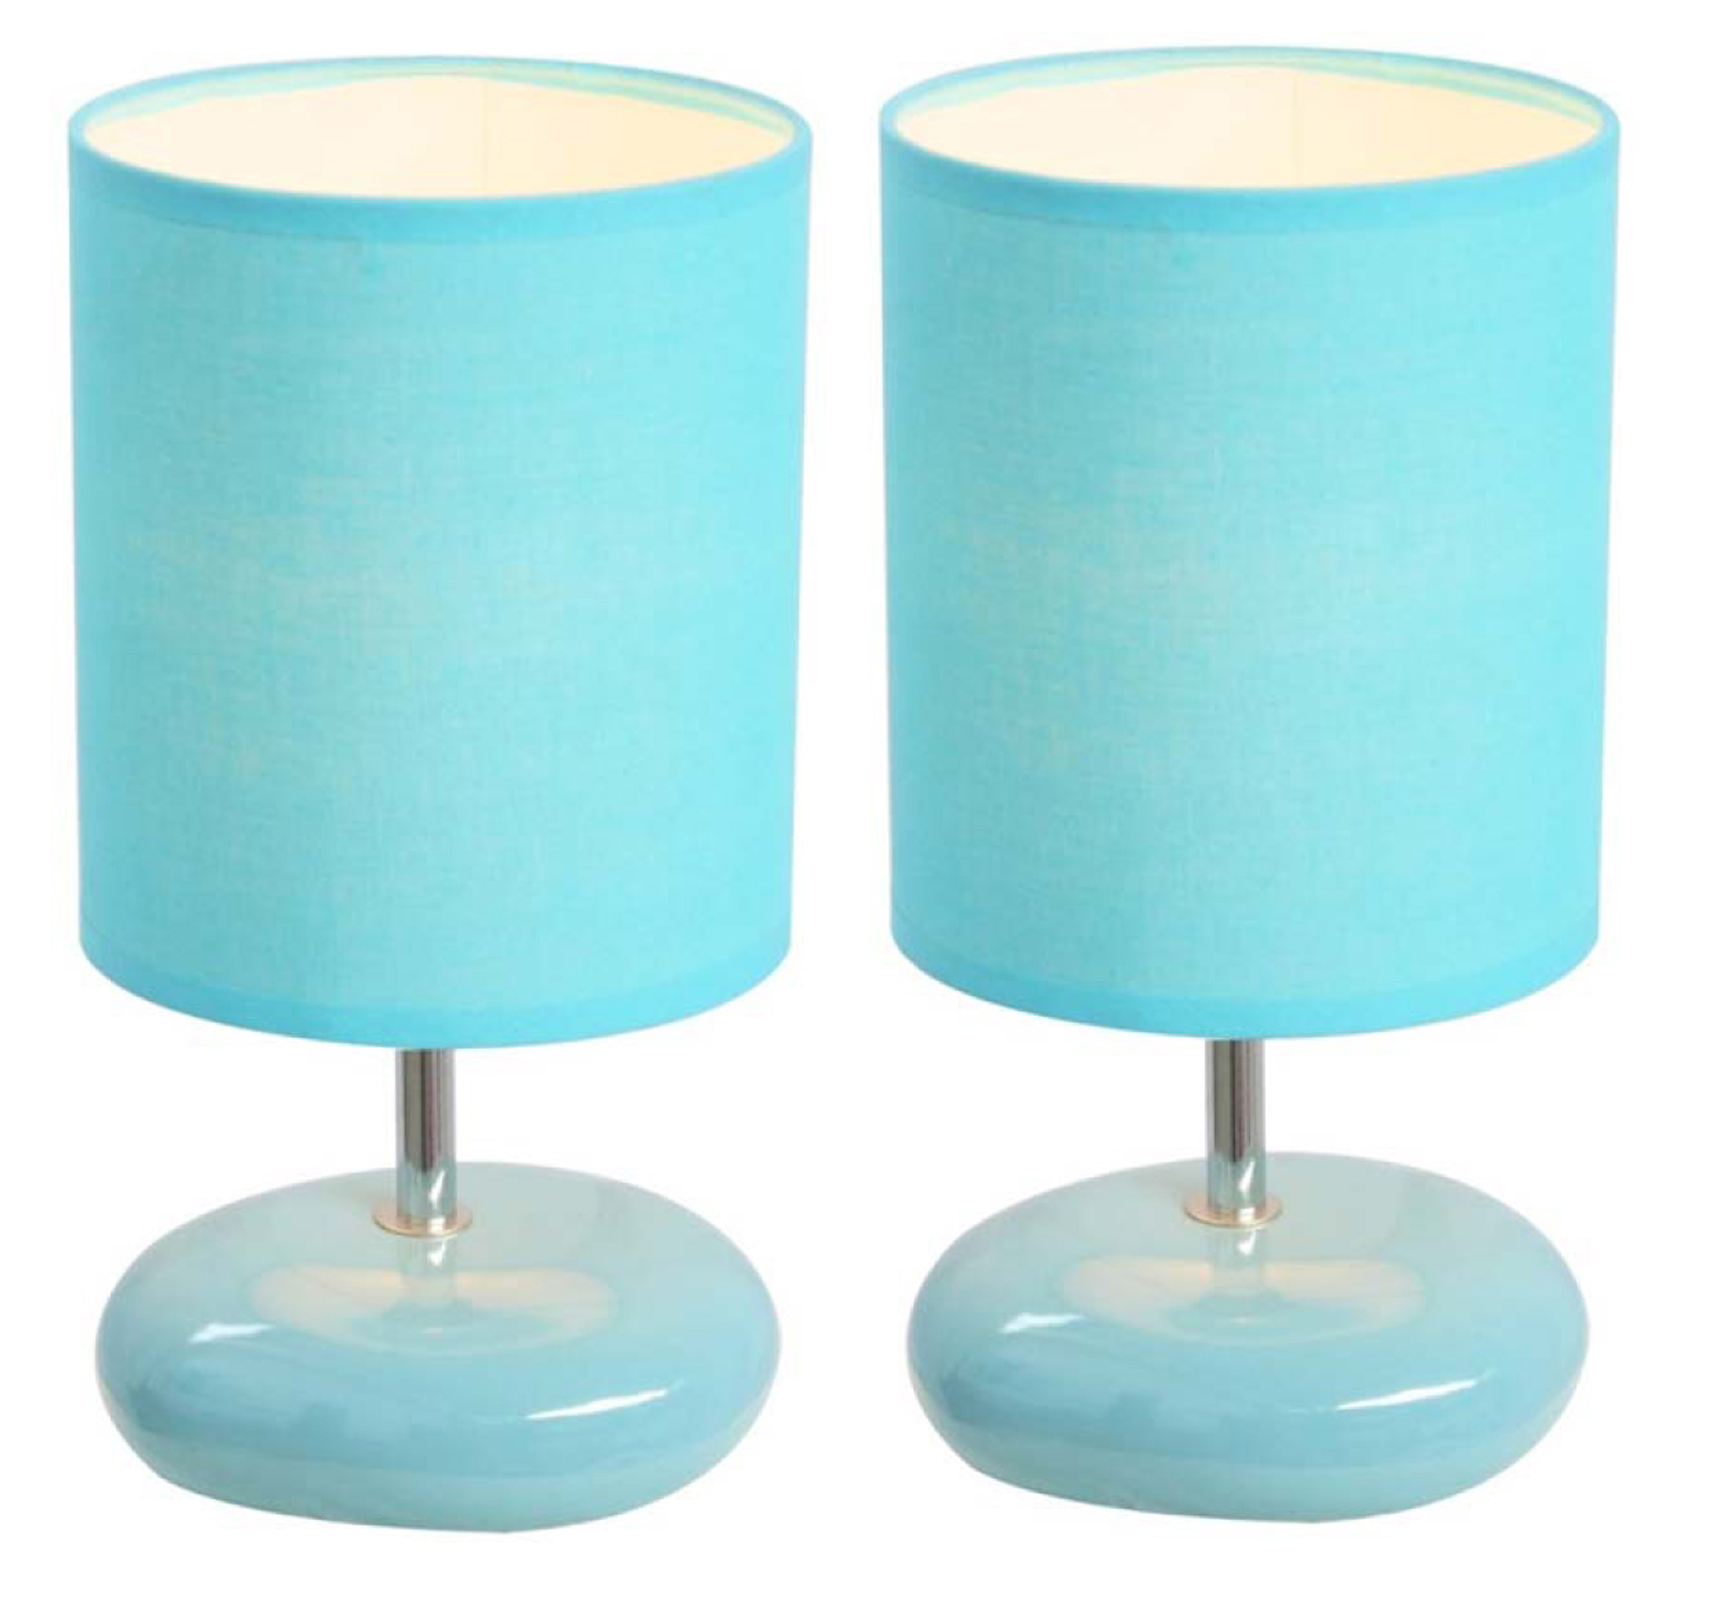 Simple Designs Stonies Blue Small Stone Look Lamp - 2 Pack